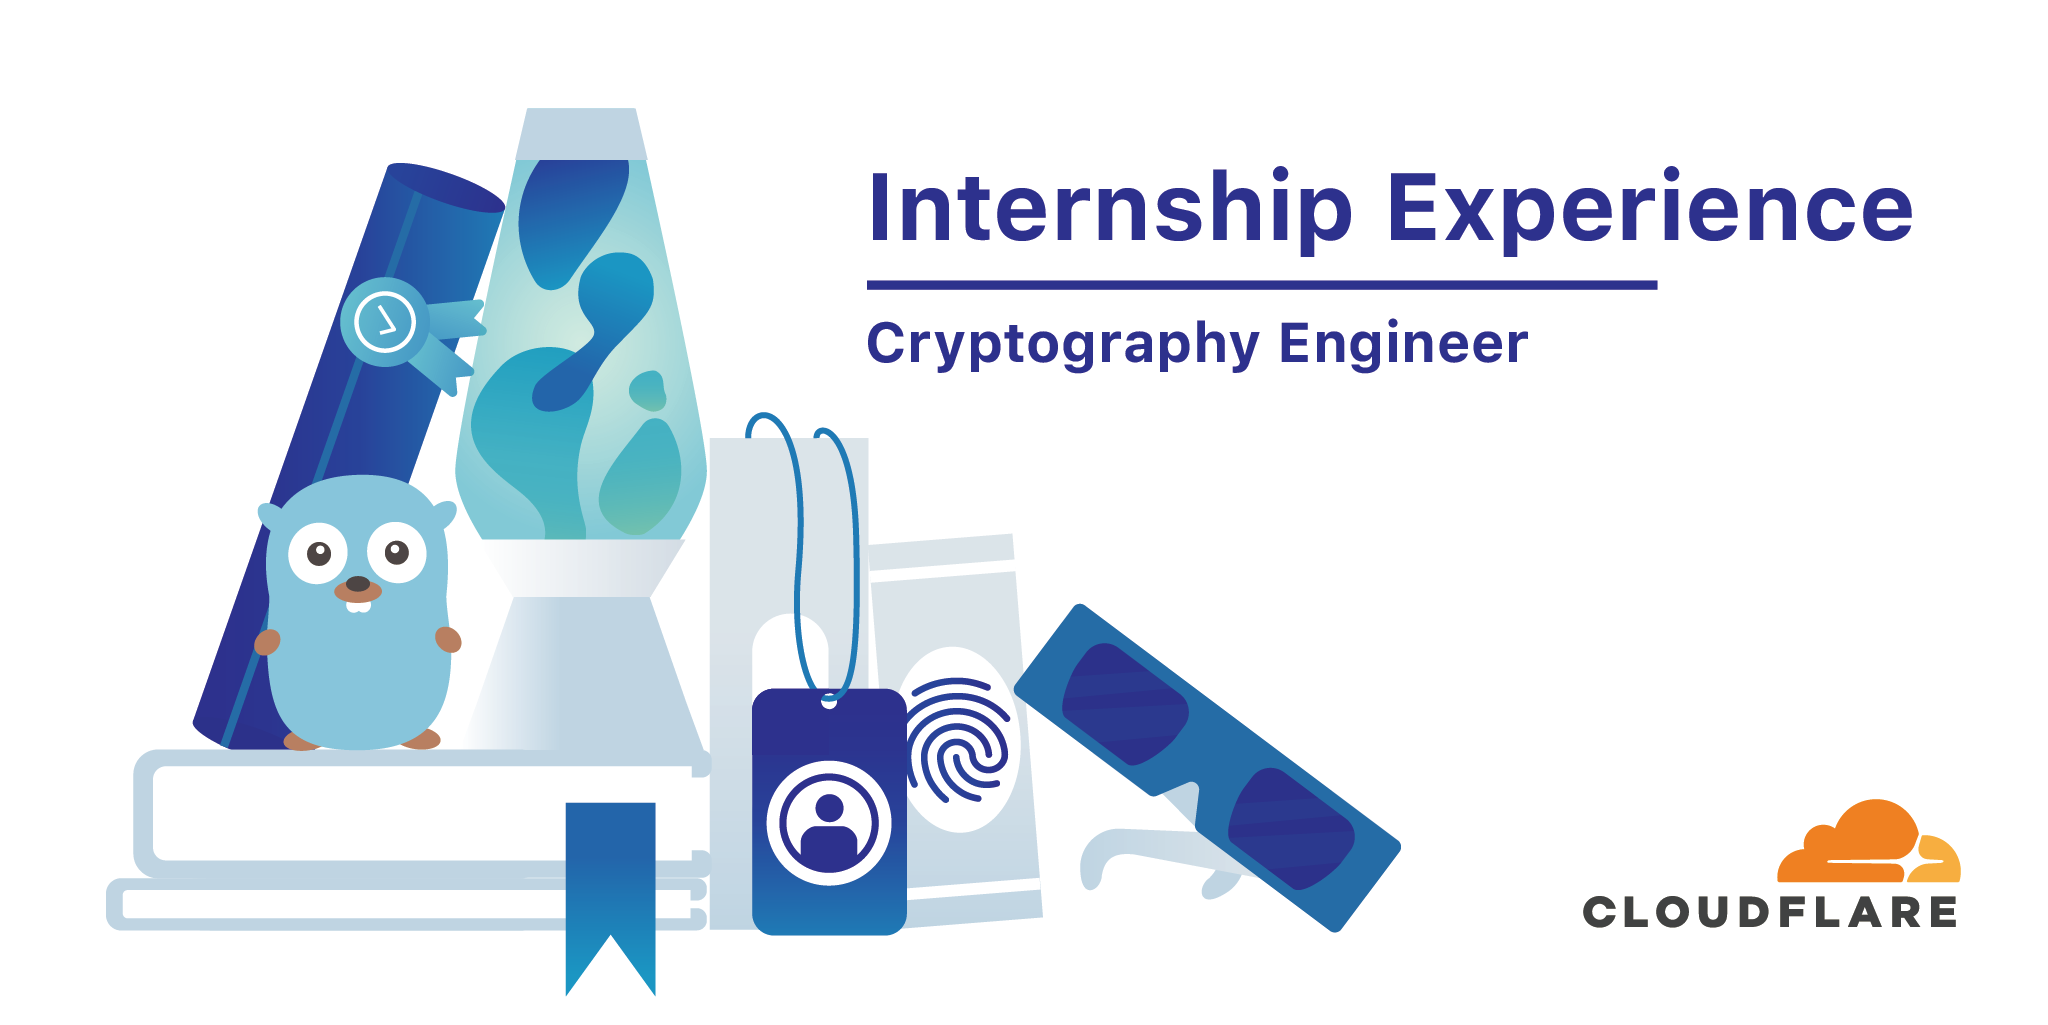 Internship Experience: Cryptography Engineer